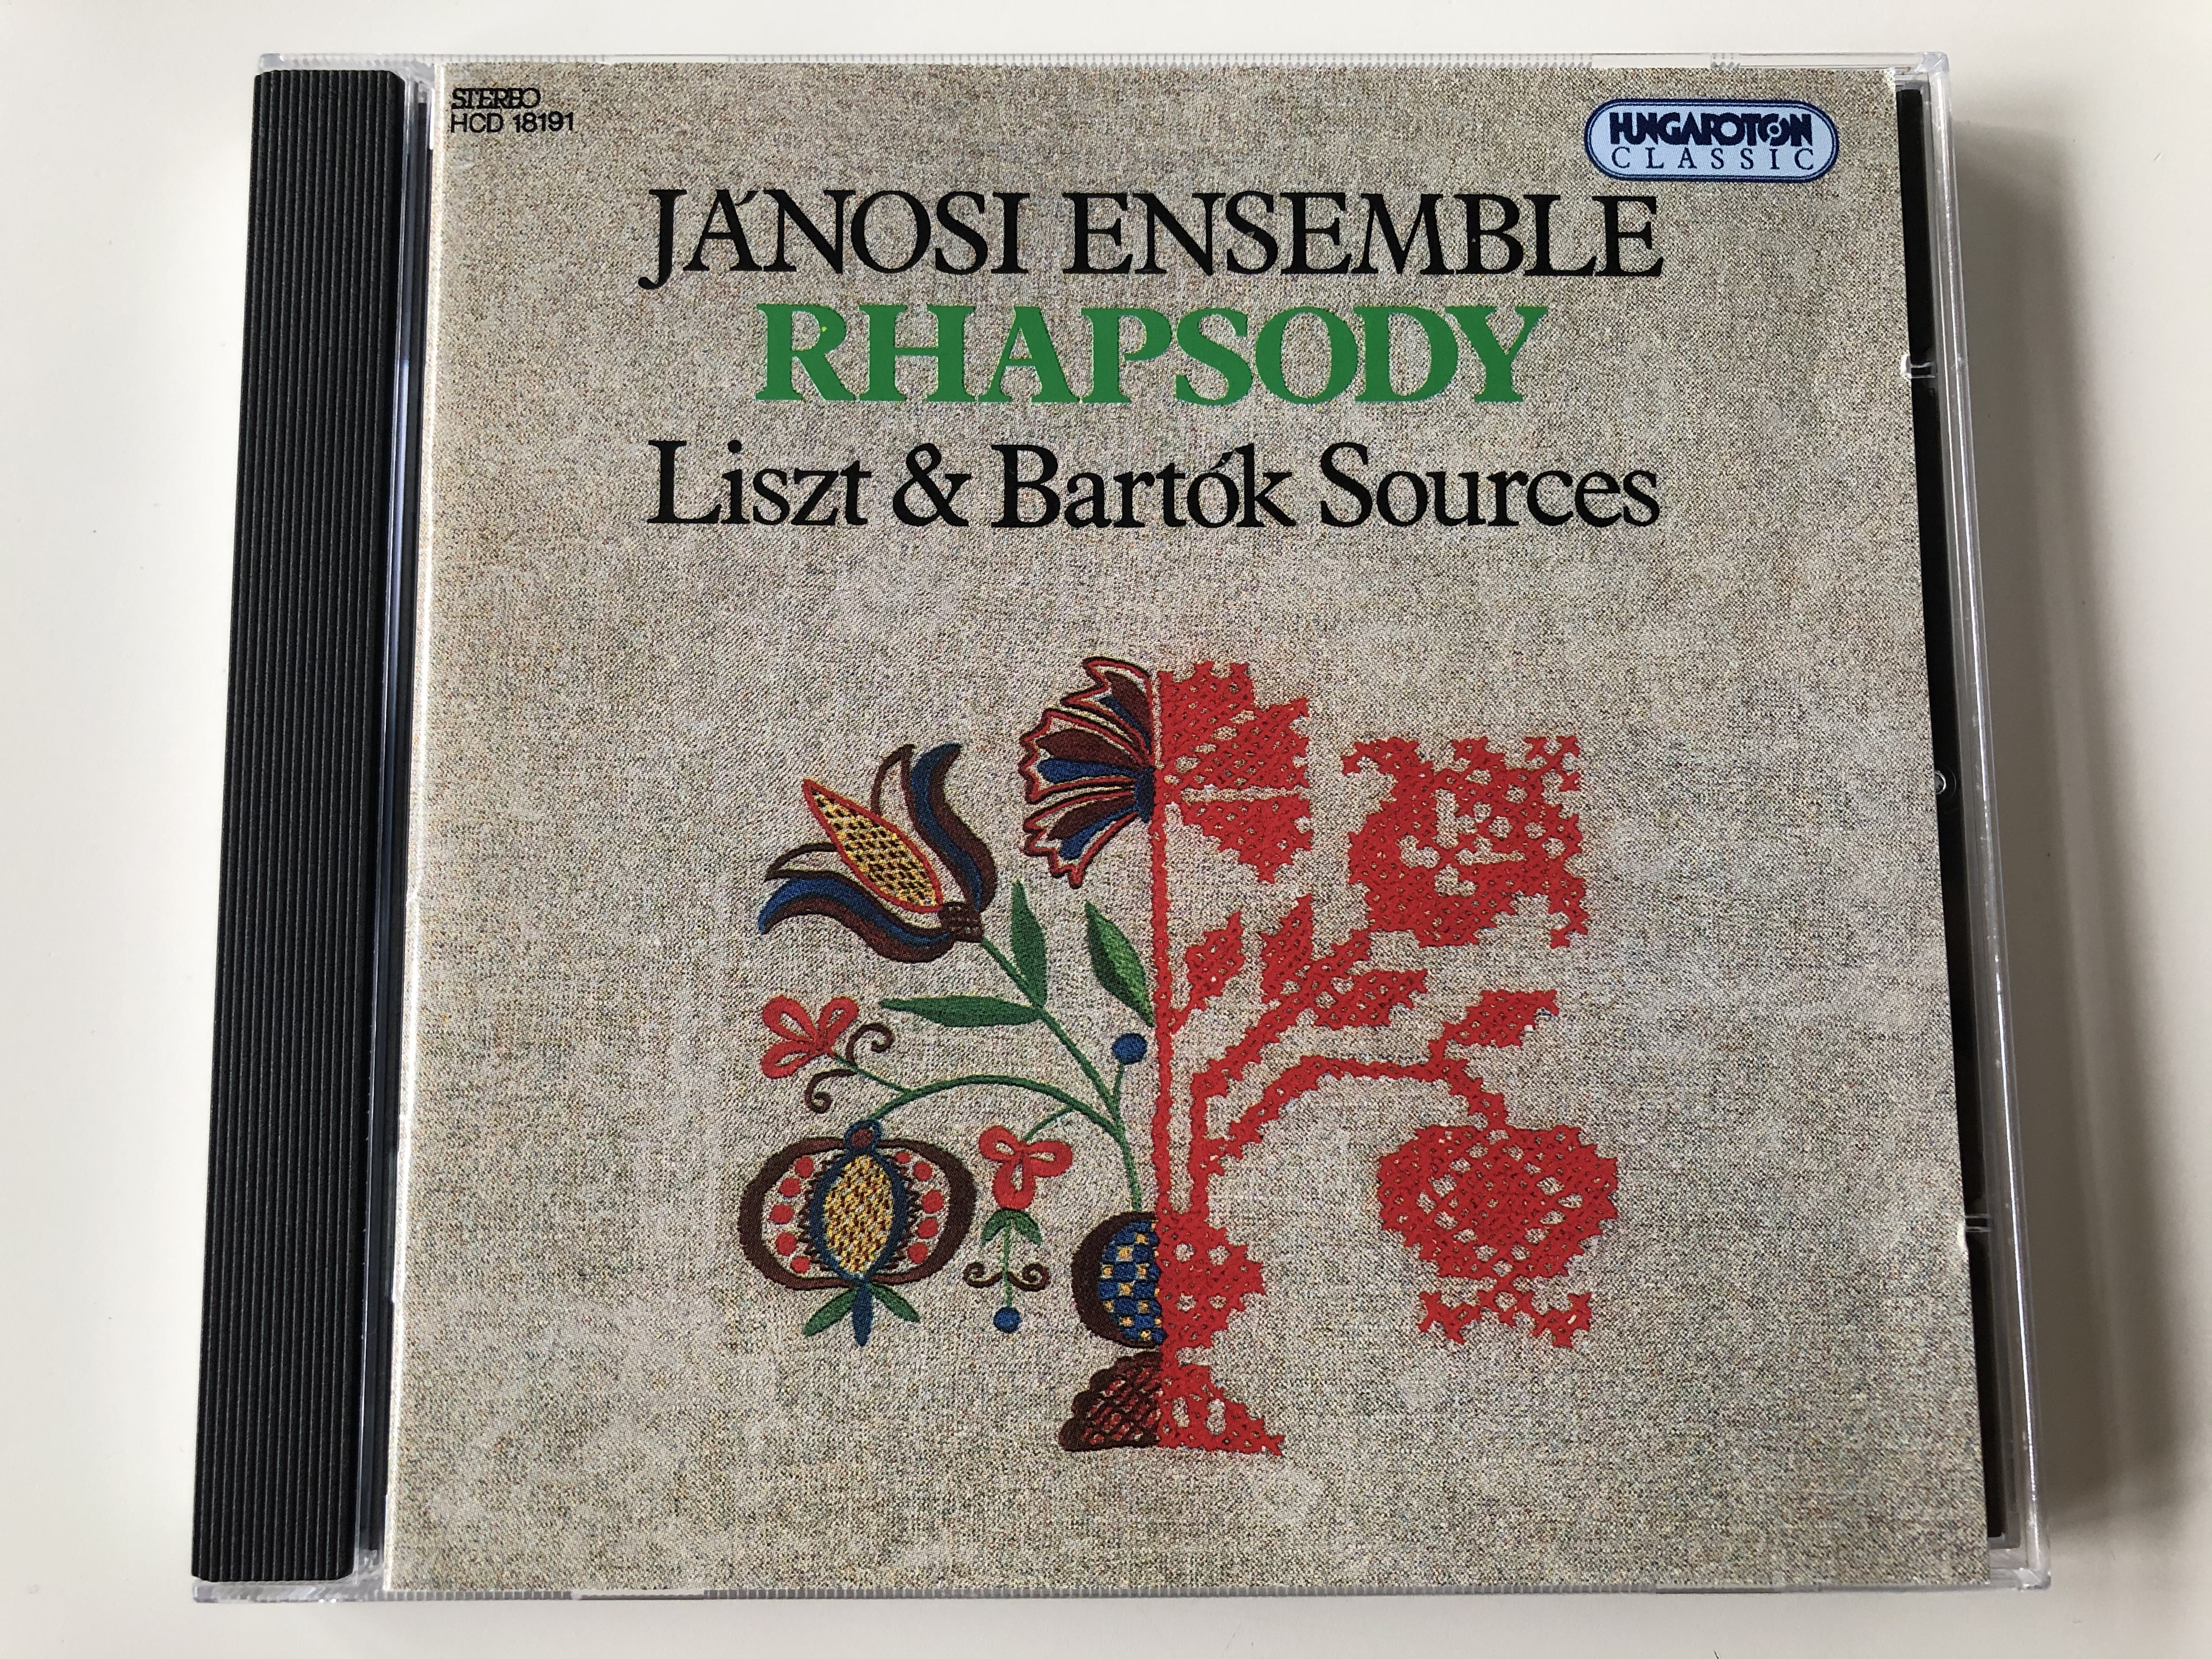 j-nosi-ensemble-rhapsody-liszt-bart-k-sources-hungaroton-classic-audio-cd-1994-stereo-hcd-18191-1-.jpg